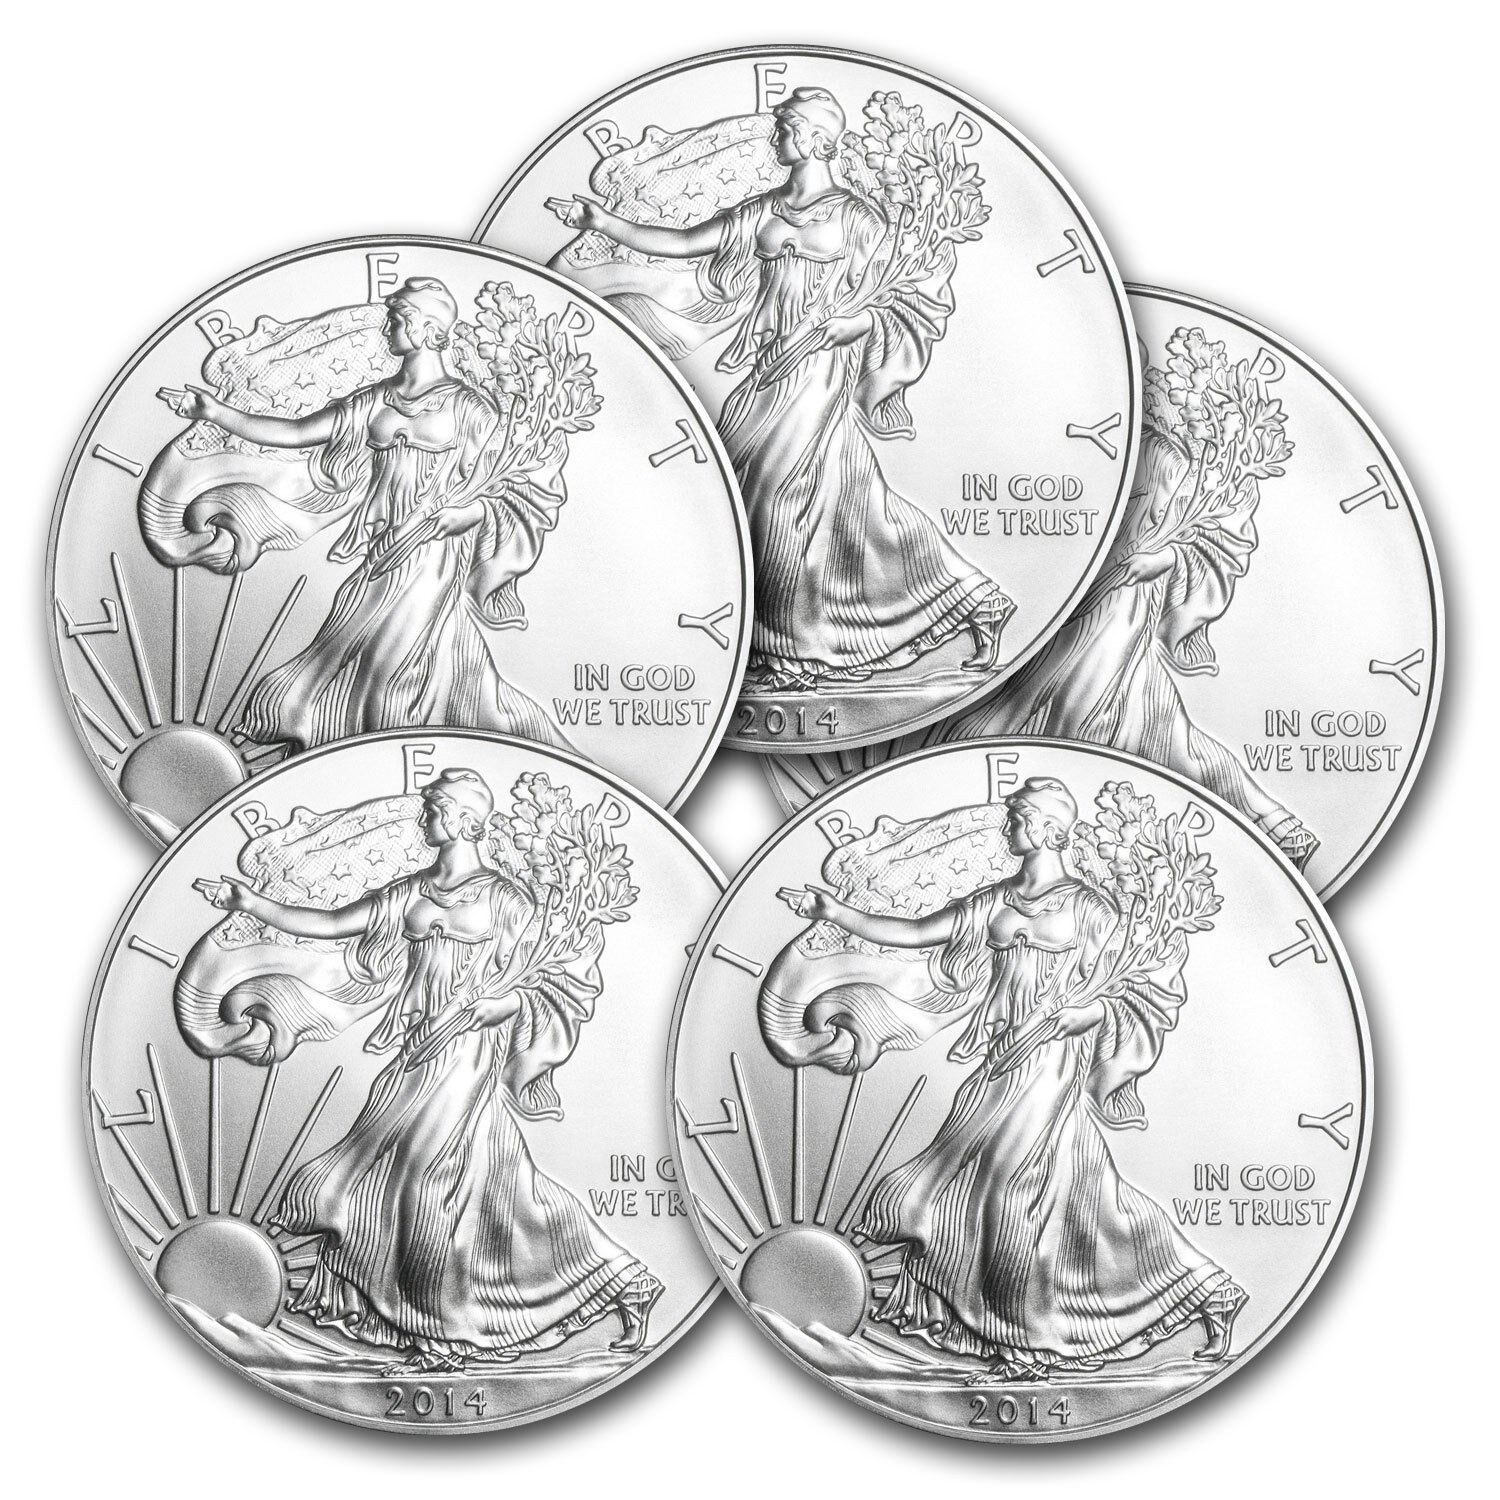 2014 1 oz Silver American Eagle Coin - Lot of 5 Coins - SKU #79744